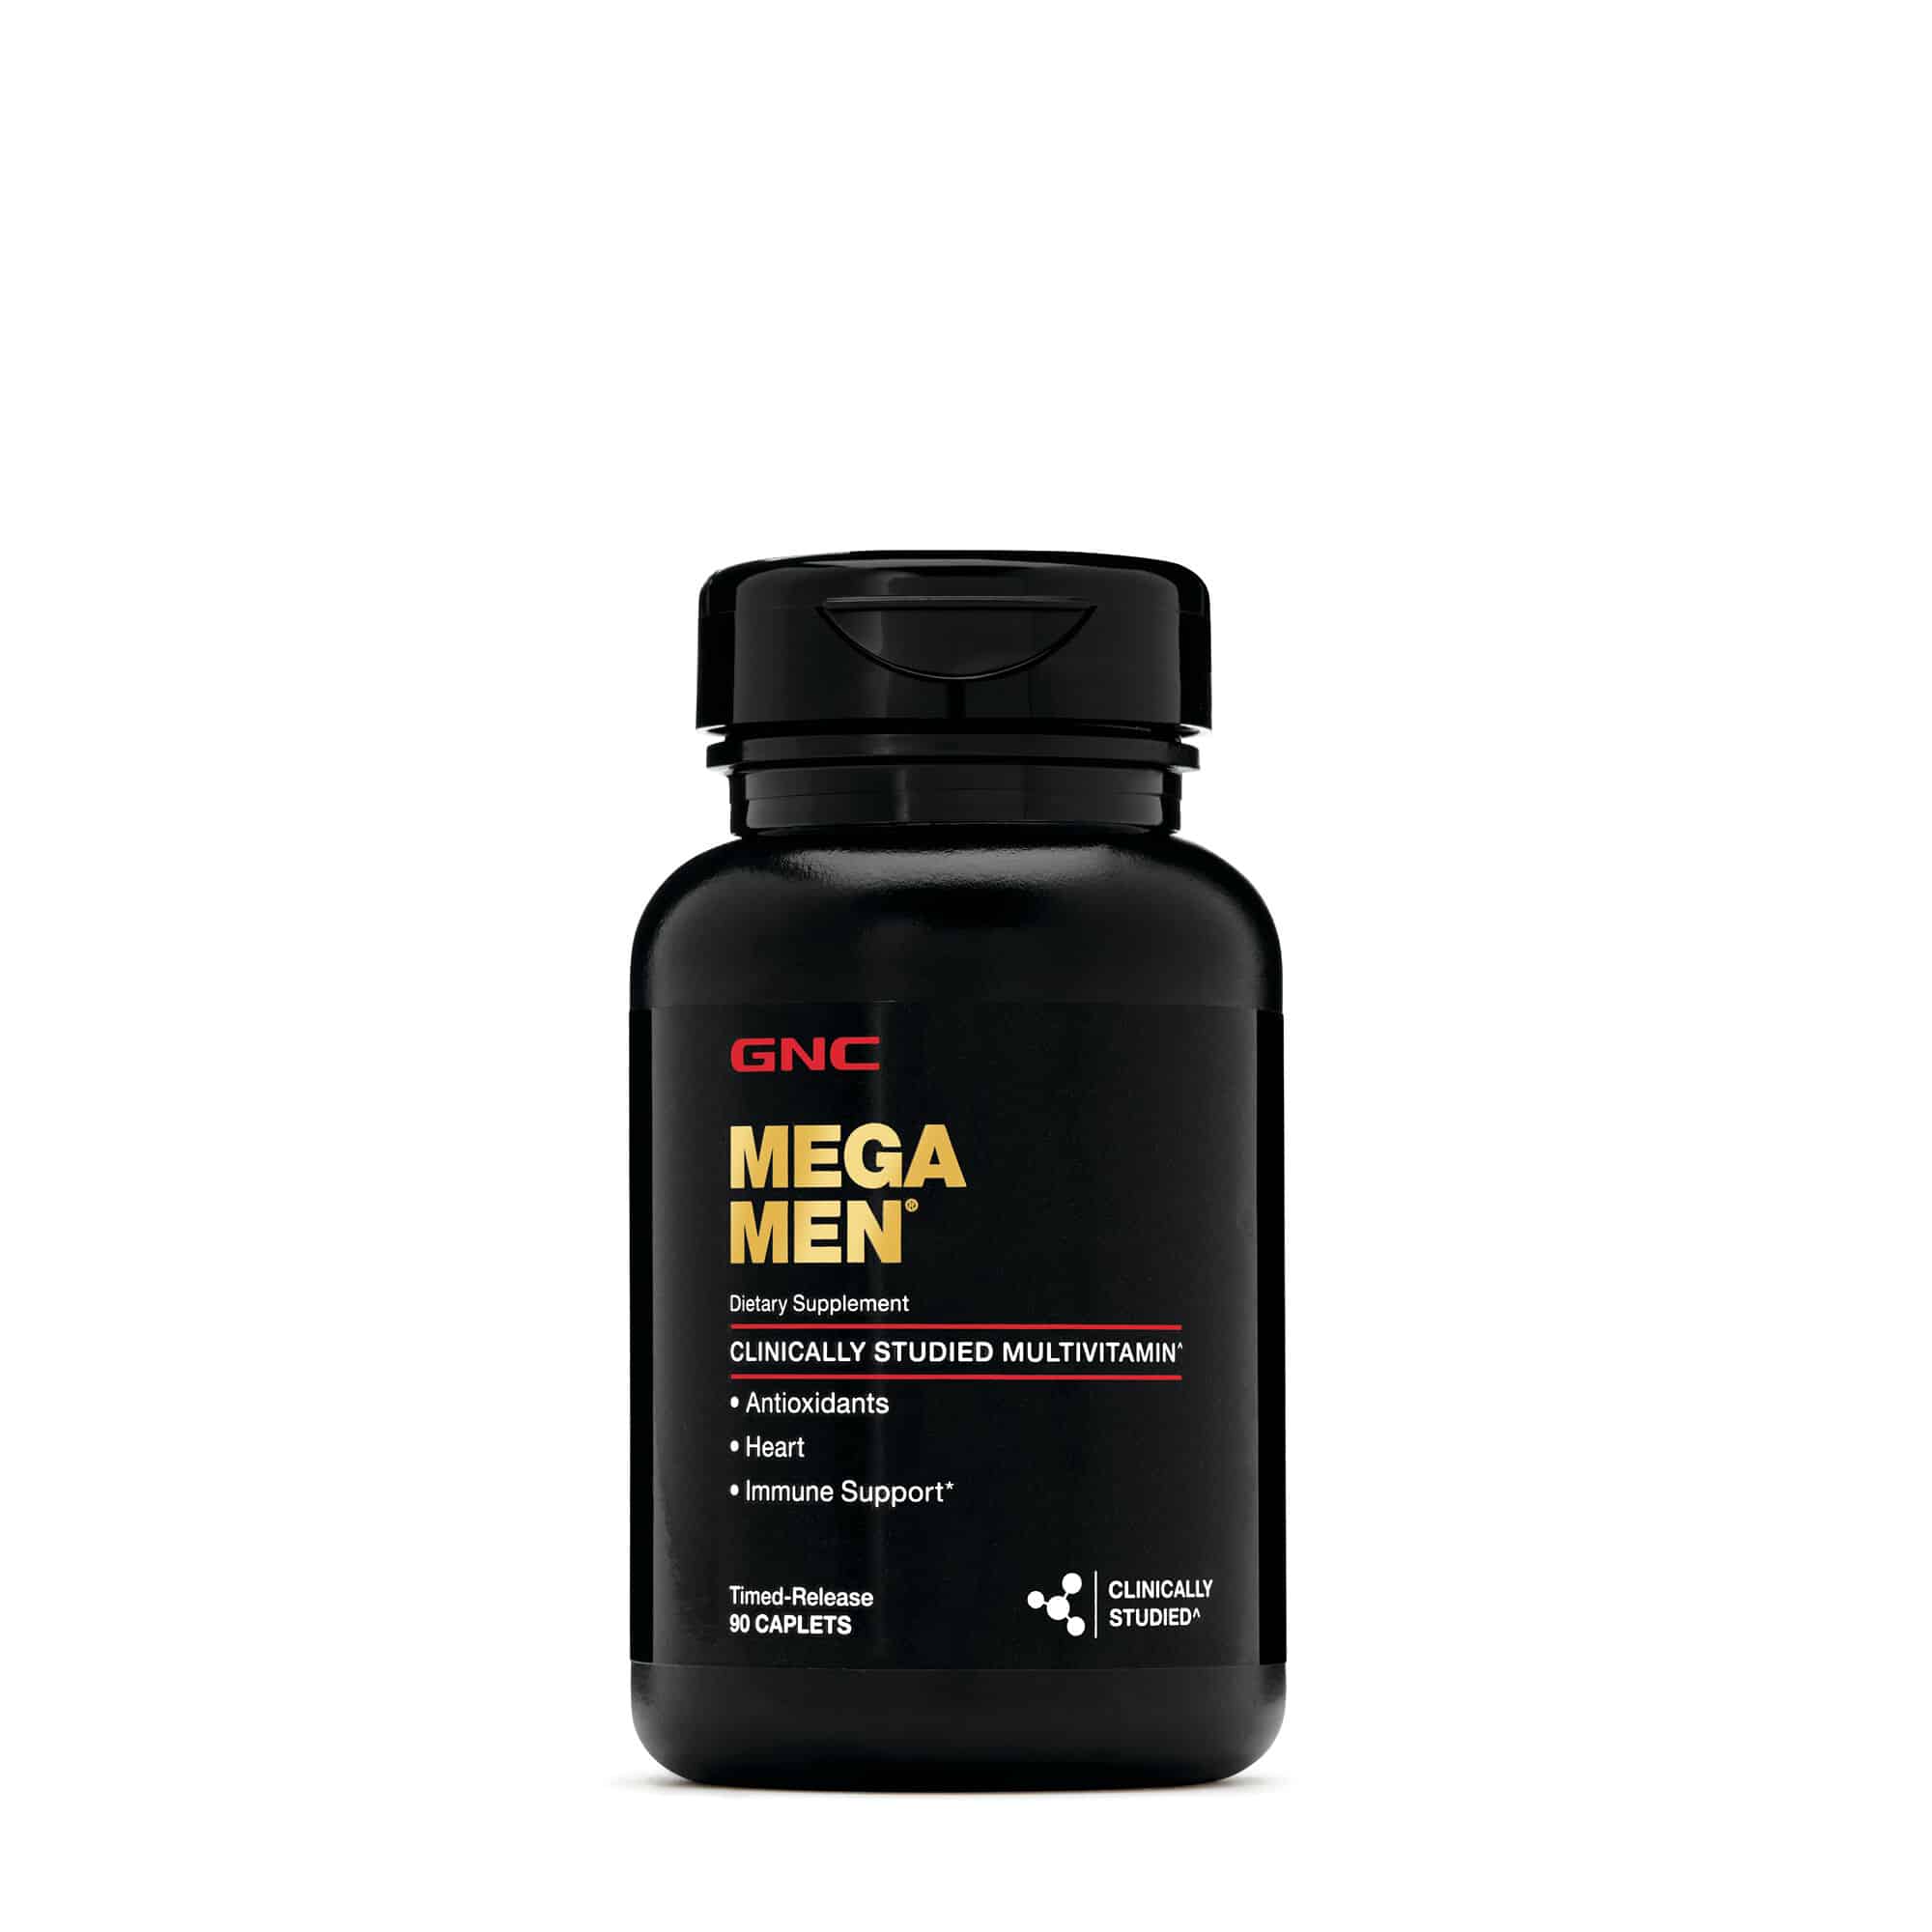 GNC Mega Men Multivitamin for Men, 90 Count, Antioxidants, Heart Health ...